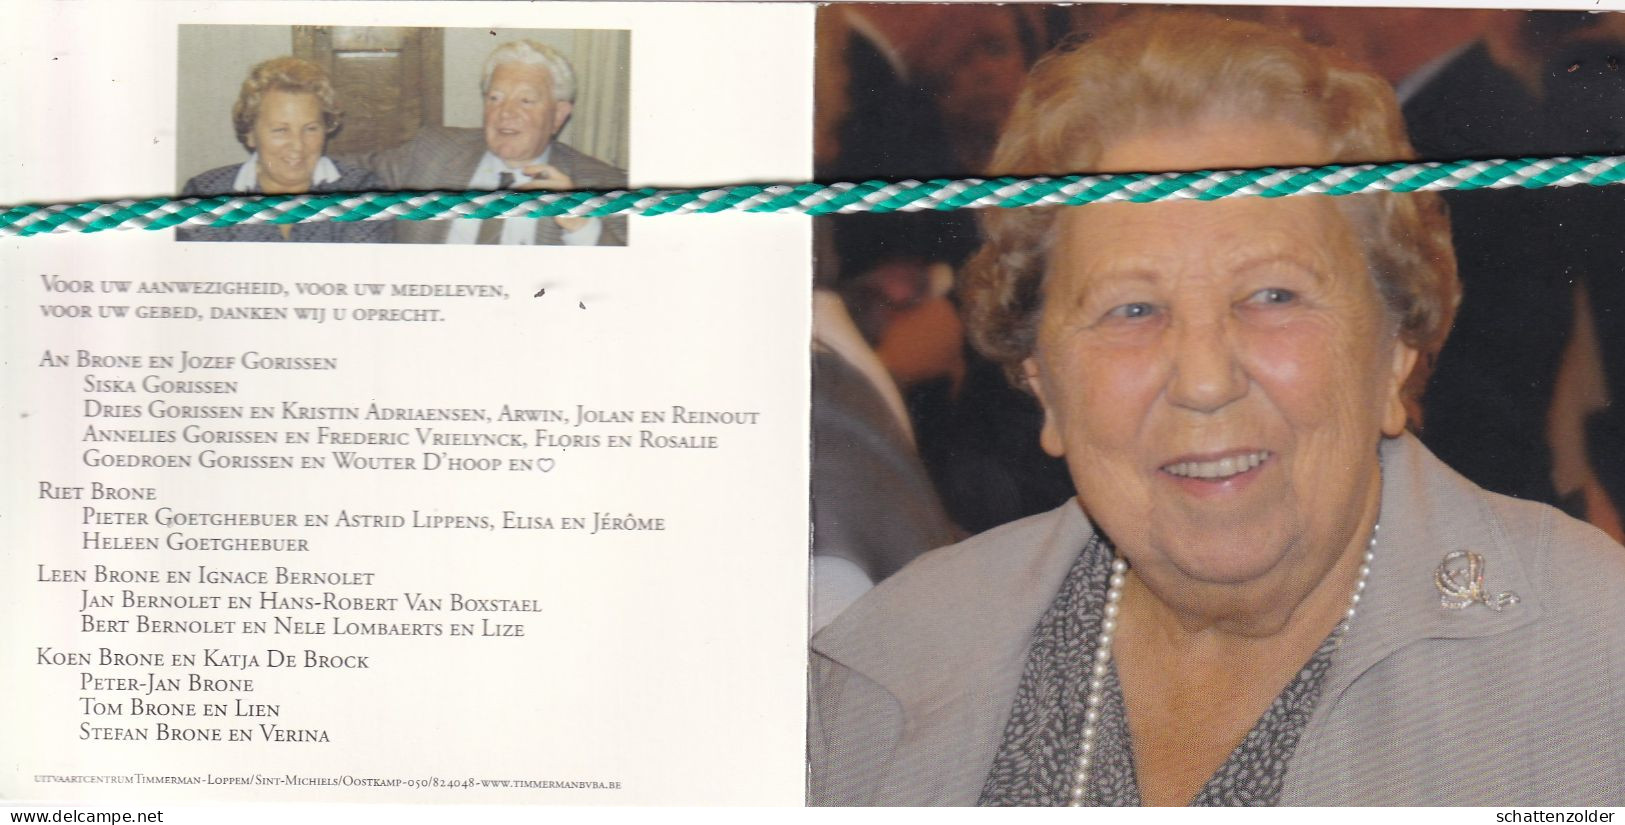 Yvonne Robbe-Brone, Roeselare 1920, Brugge 2013. Foto - Esquela